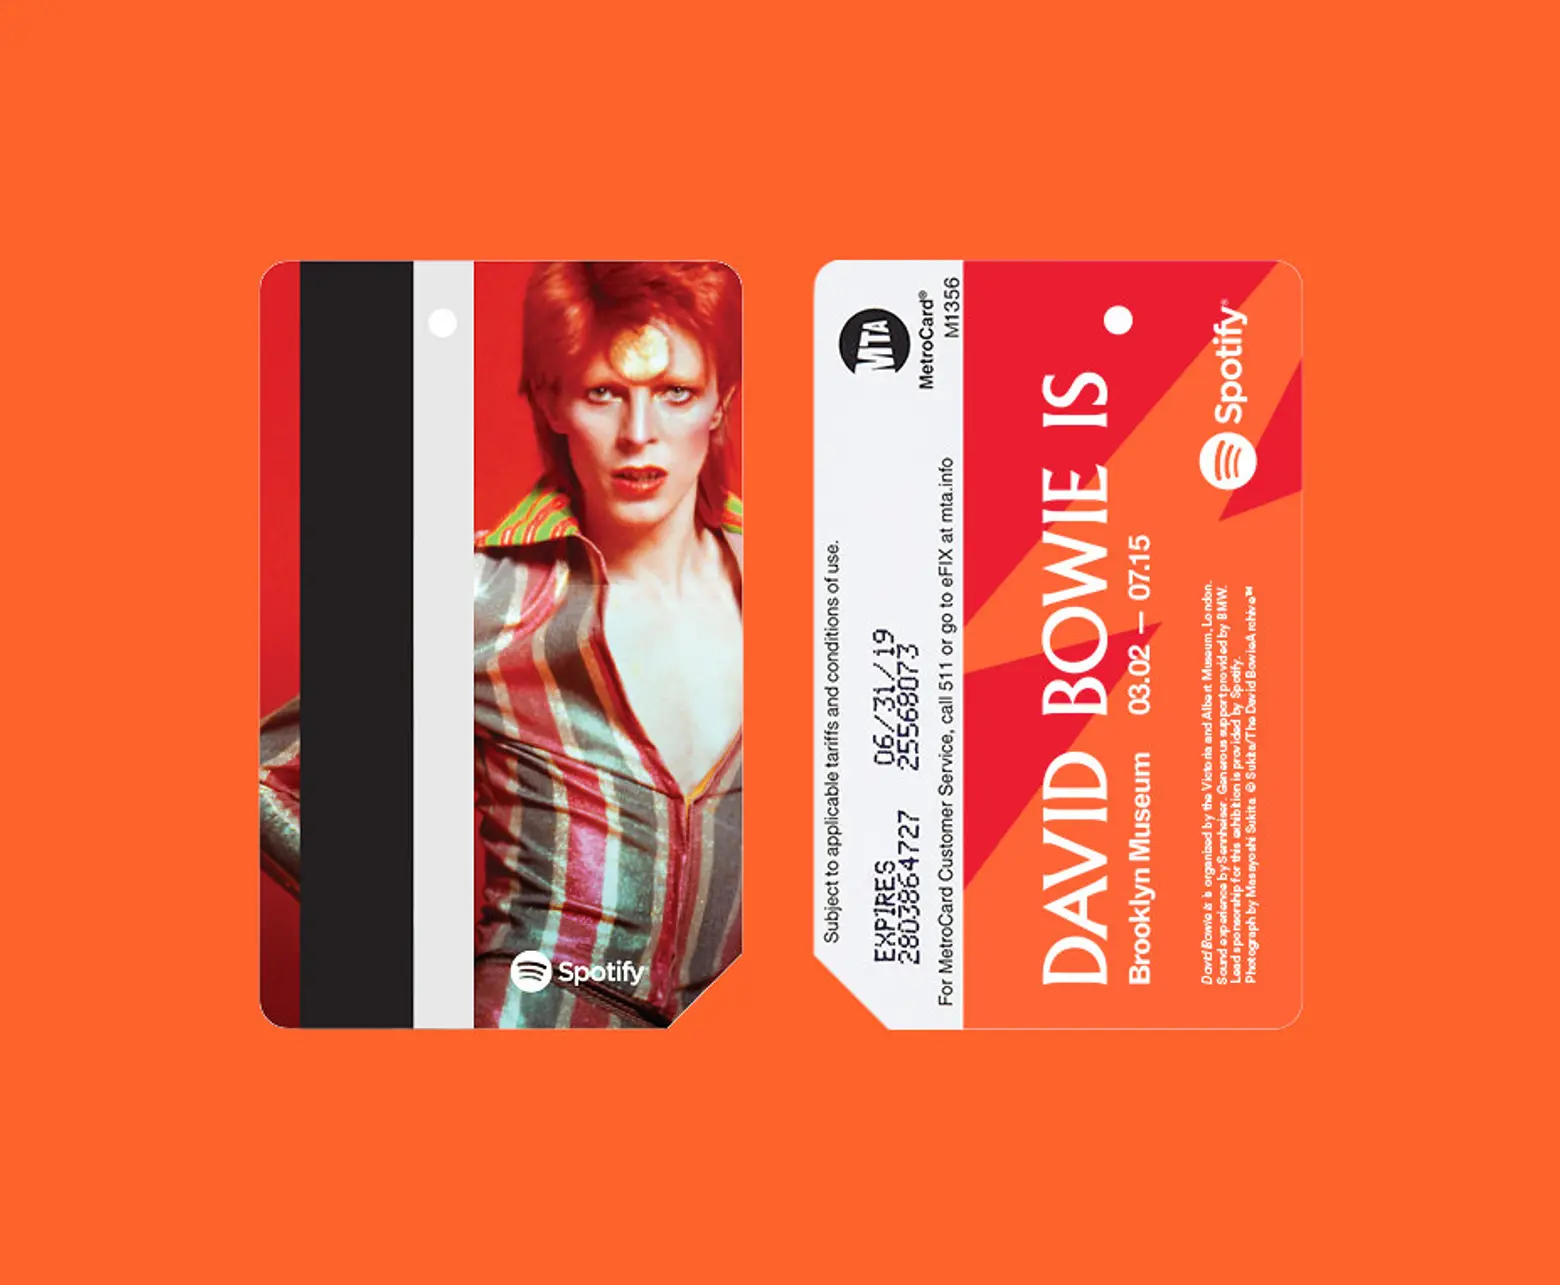 Brooklyn Museum: David Bowie is